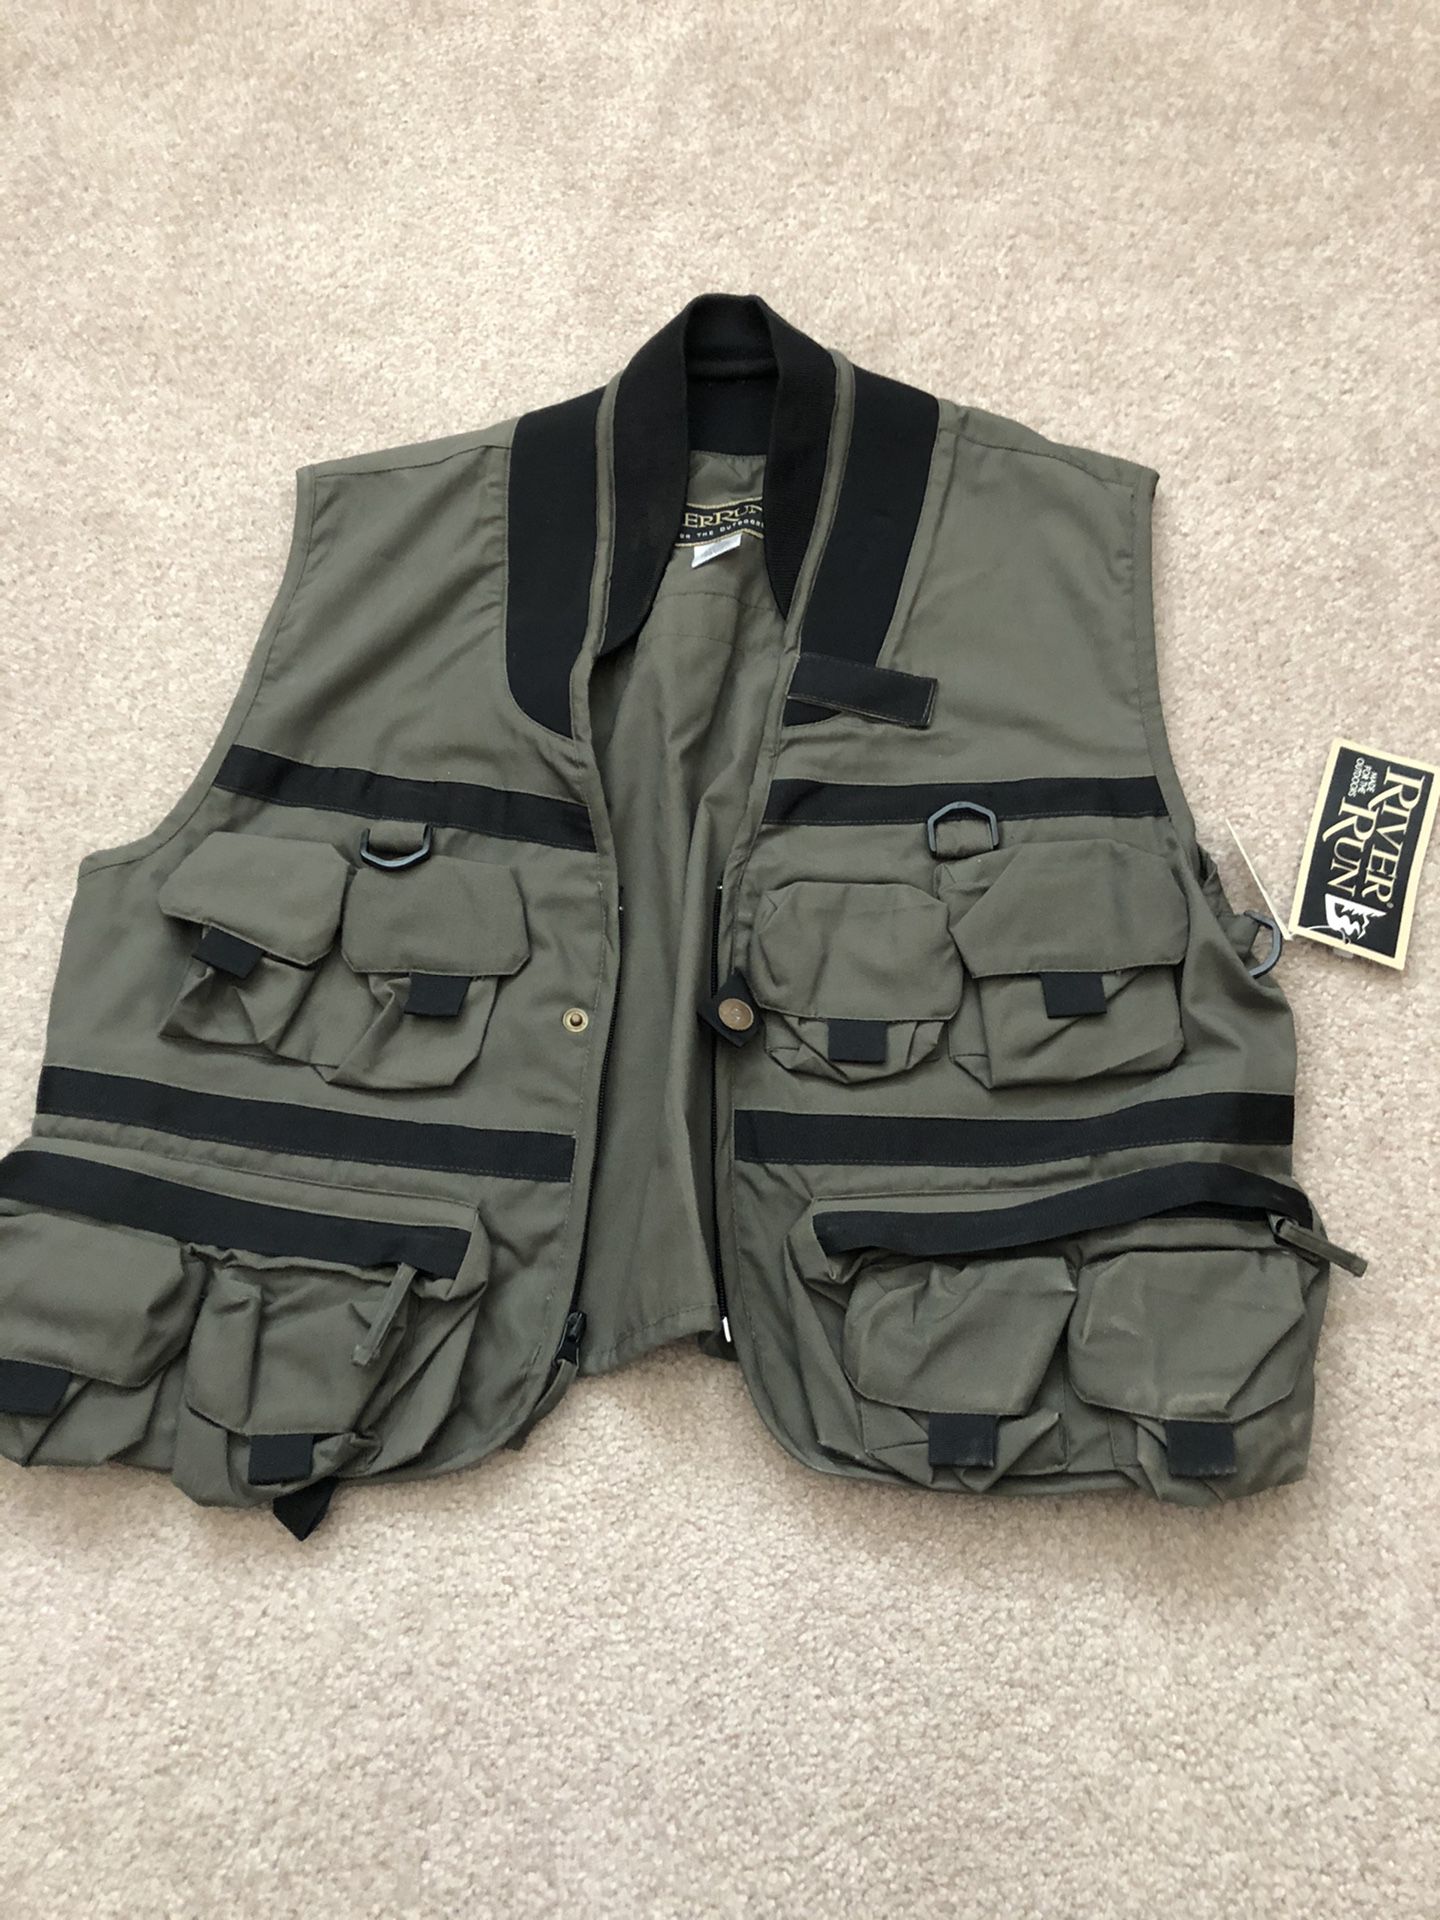 New fishing vest